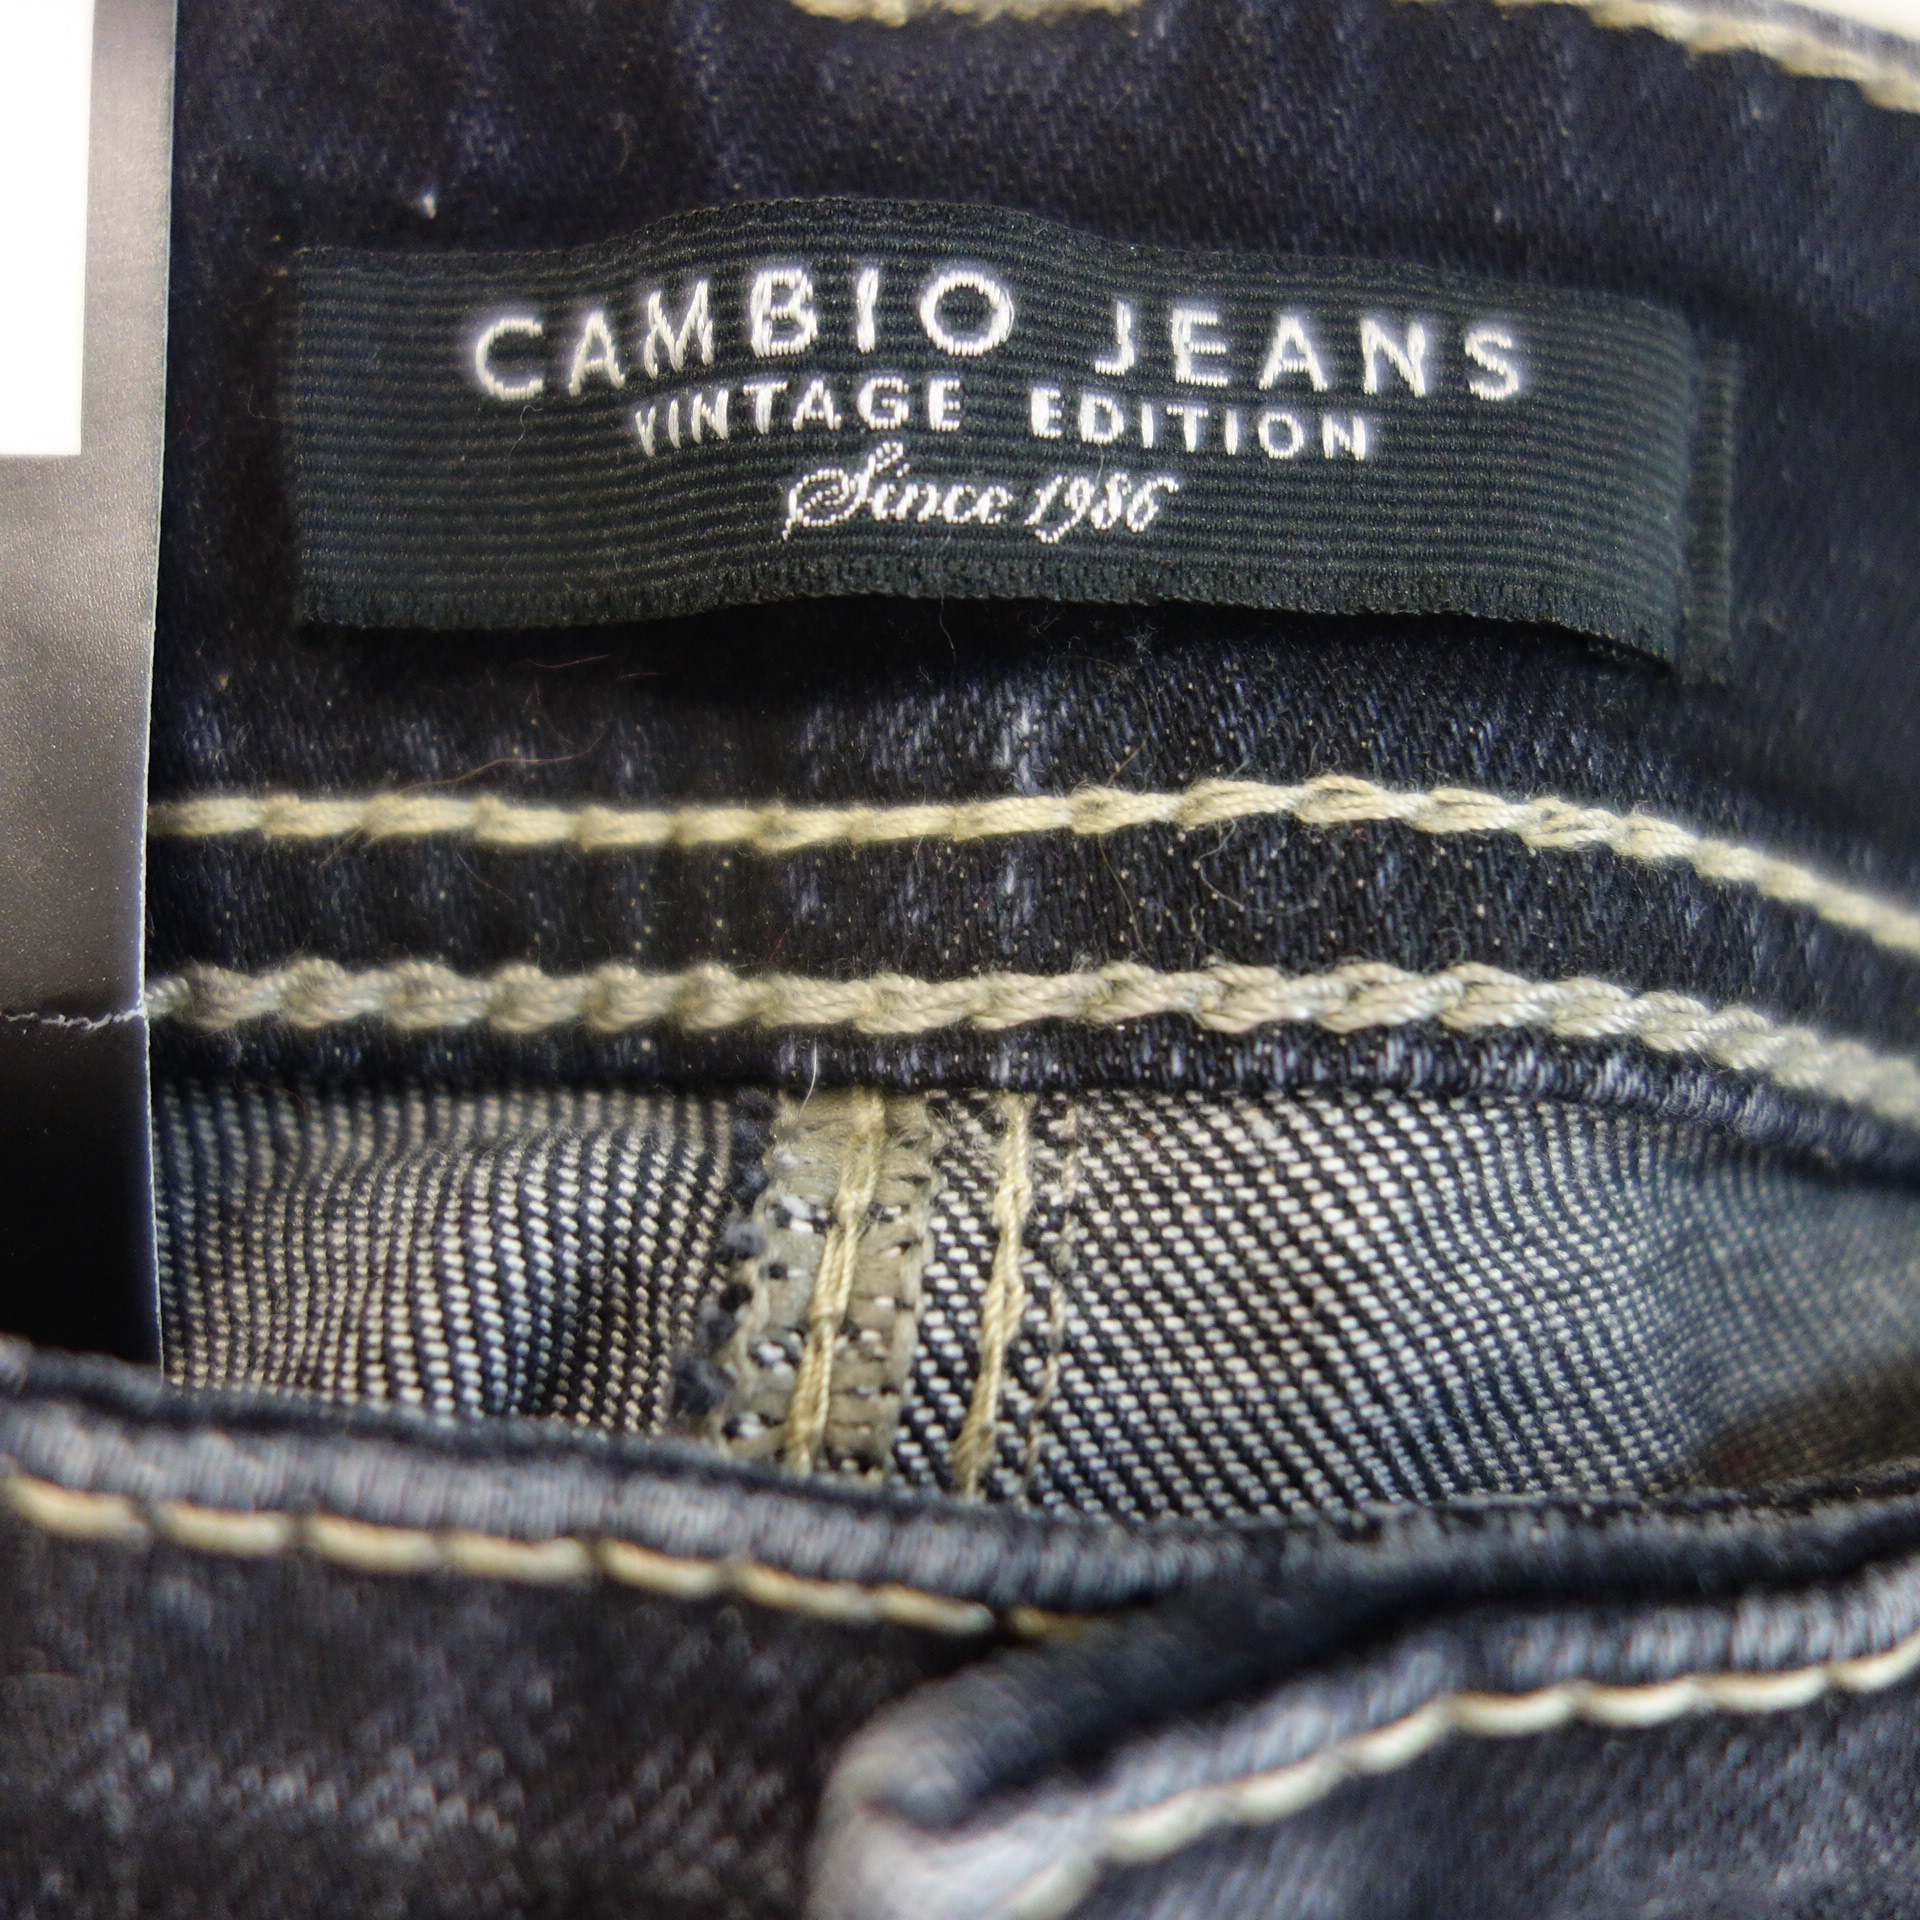 CAMBIO Damen Jeans Hose Jeanshose Vintage Edition Parla Grau Swarovski Elements 32